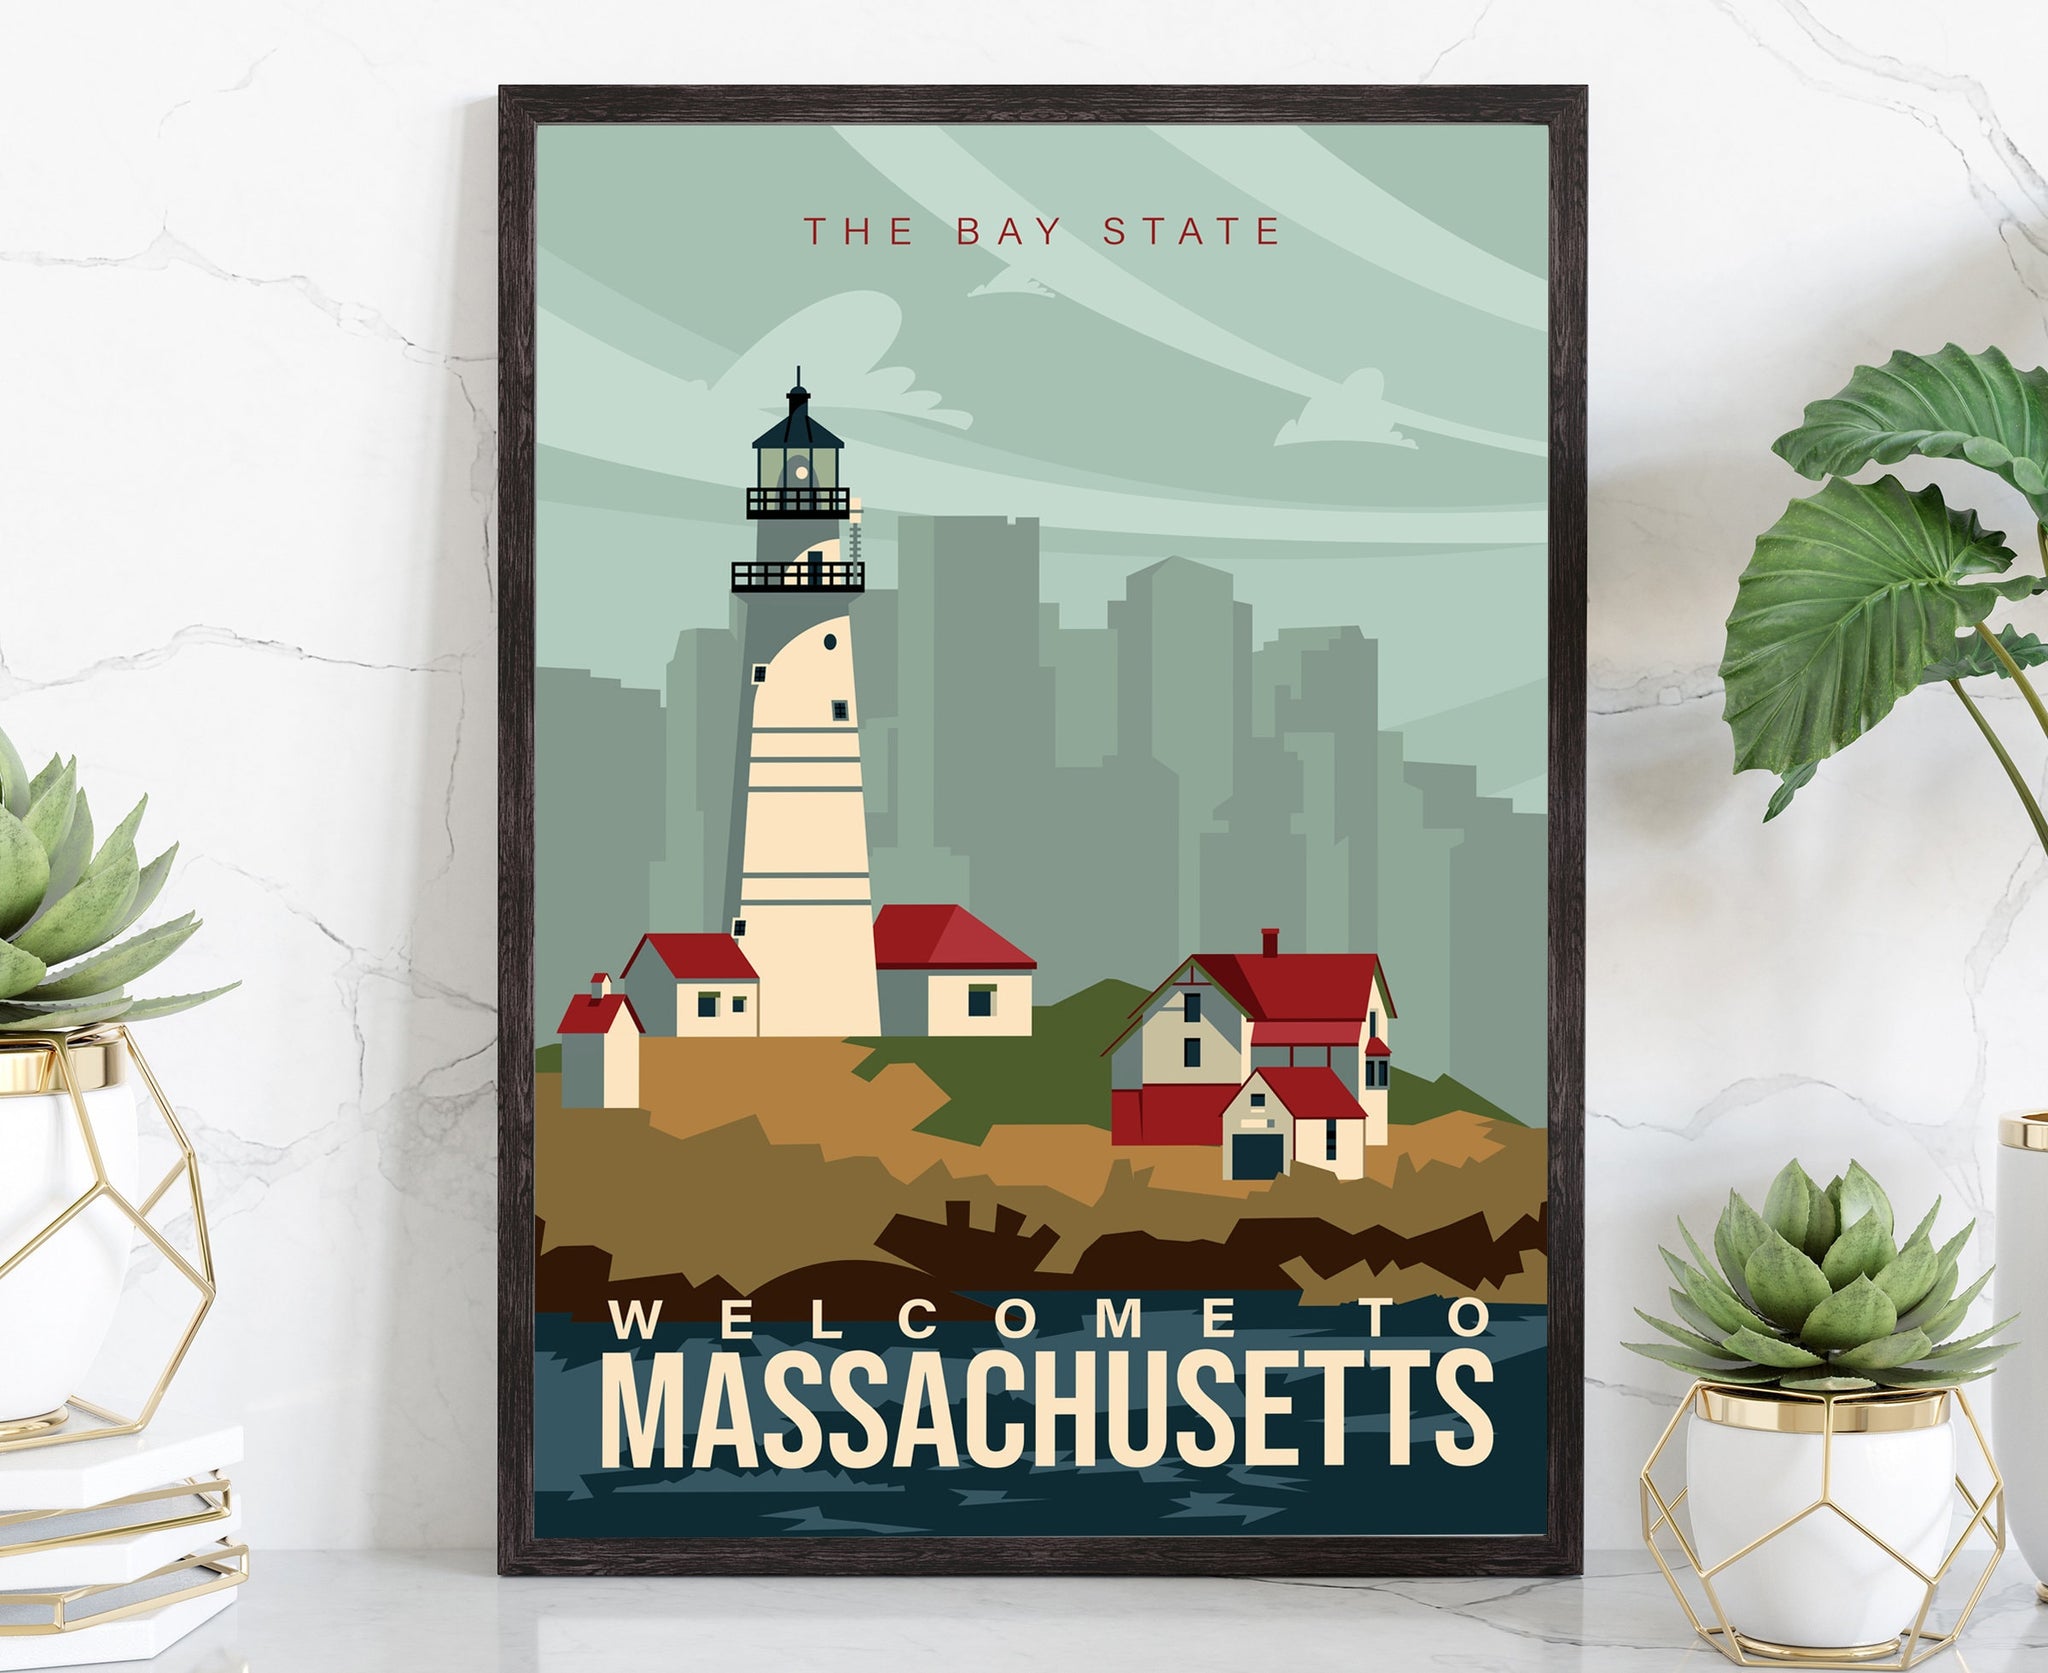 Massachusetts Vintage Rustic Poster Print, Retro Style Travel Poster